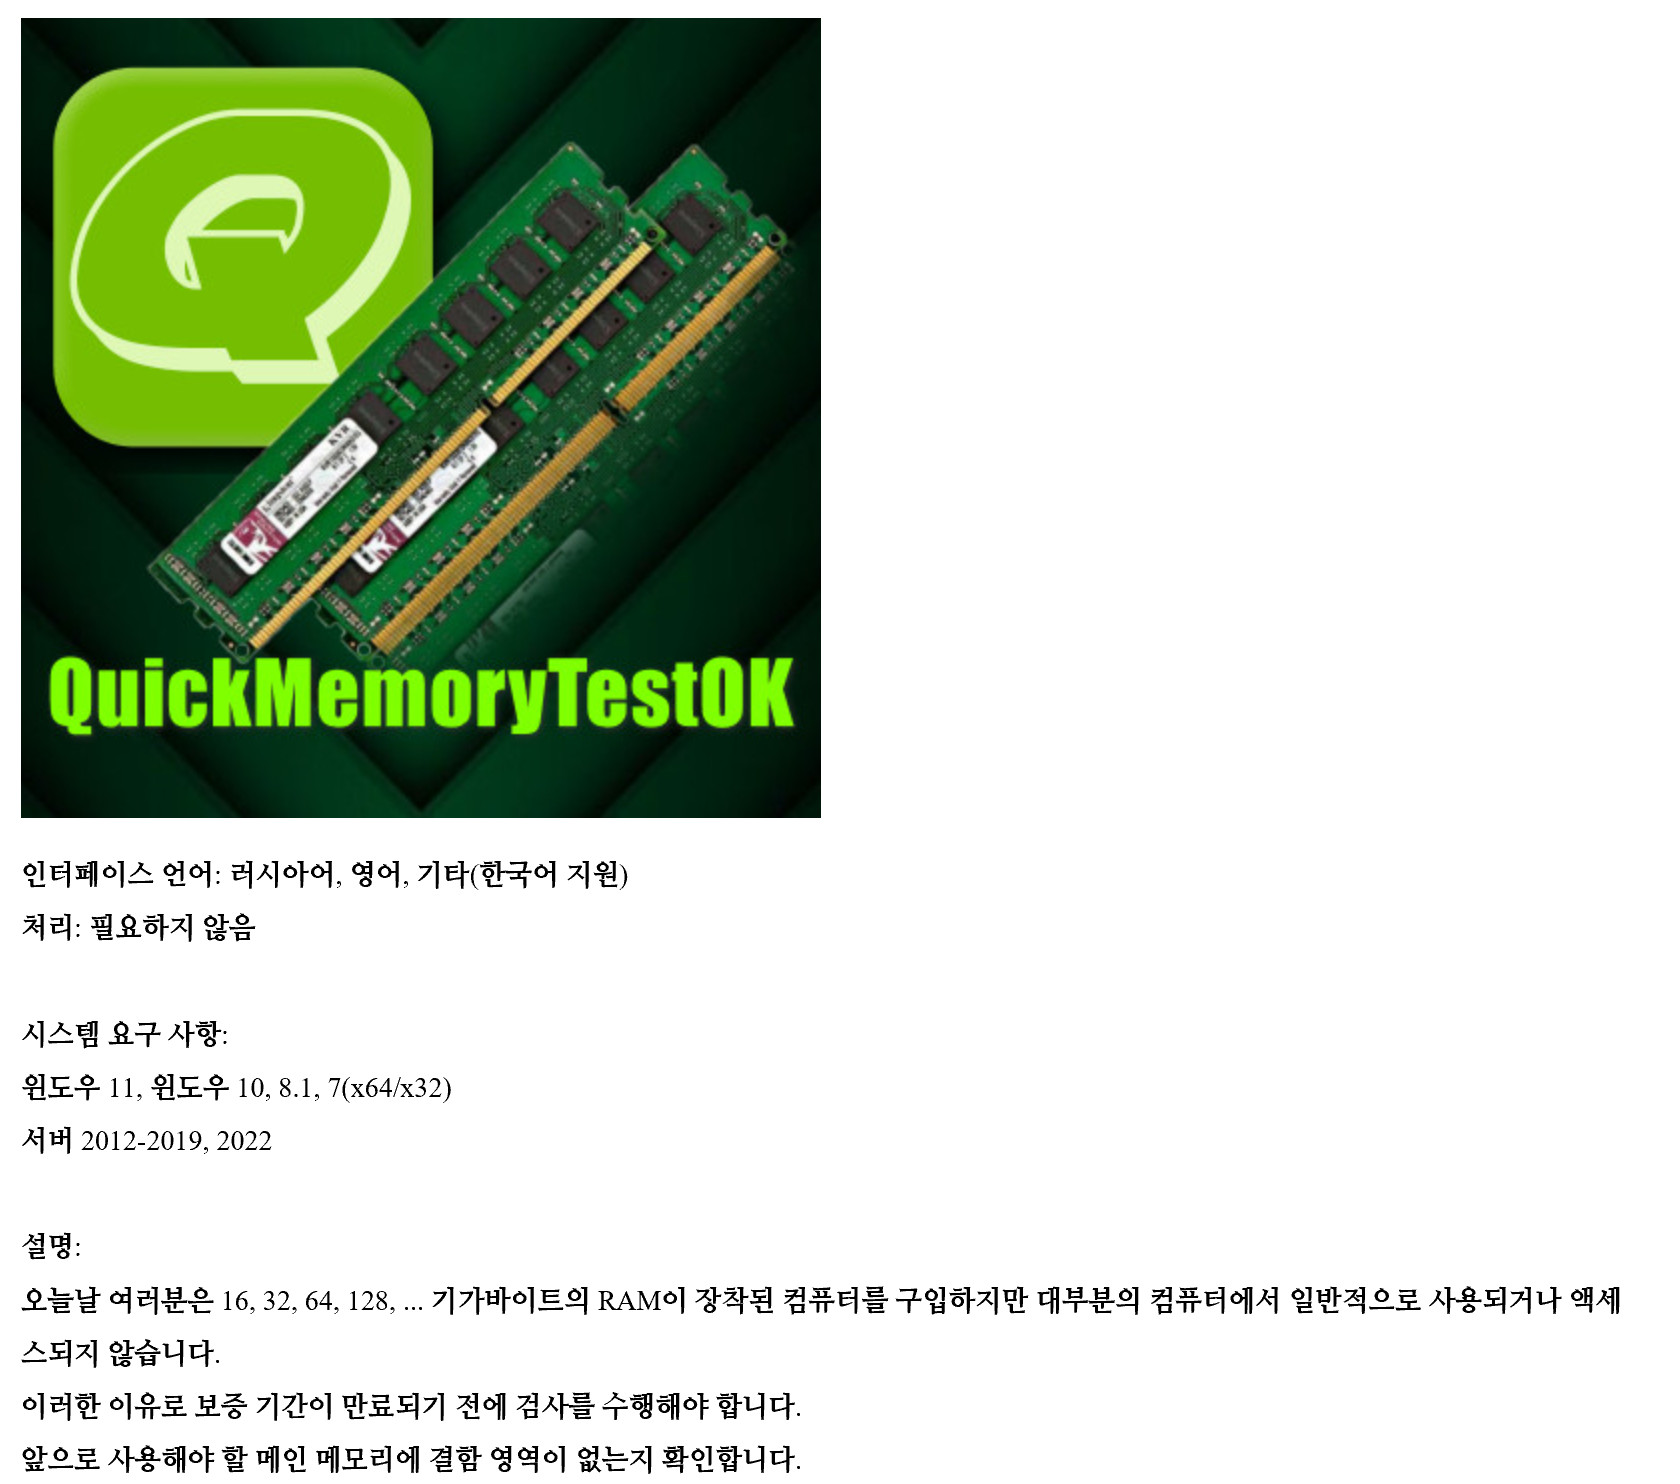 QuickMemoryTestOK 4.61 instal the new version for ipod